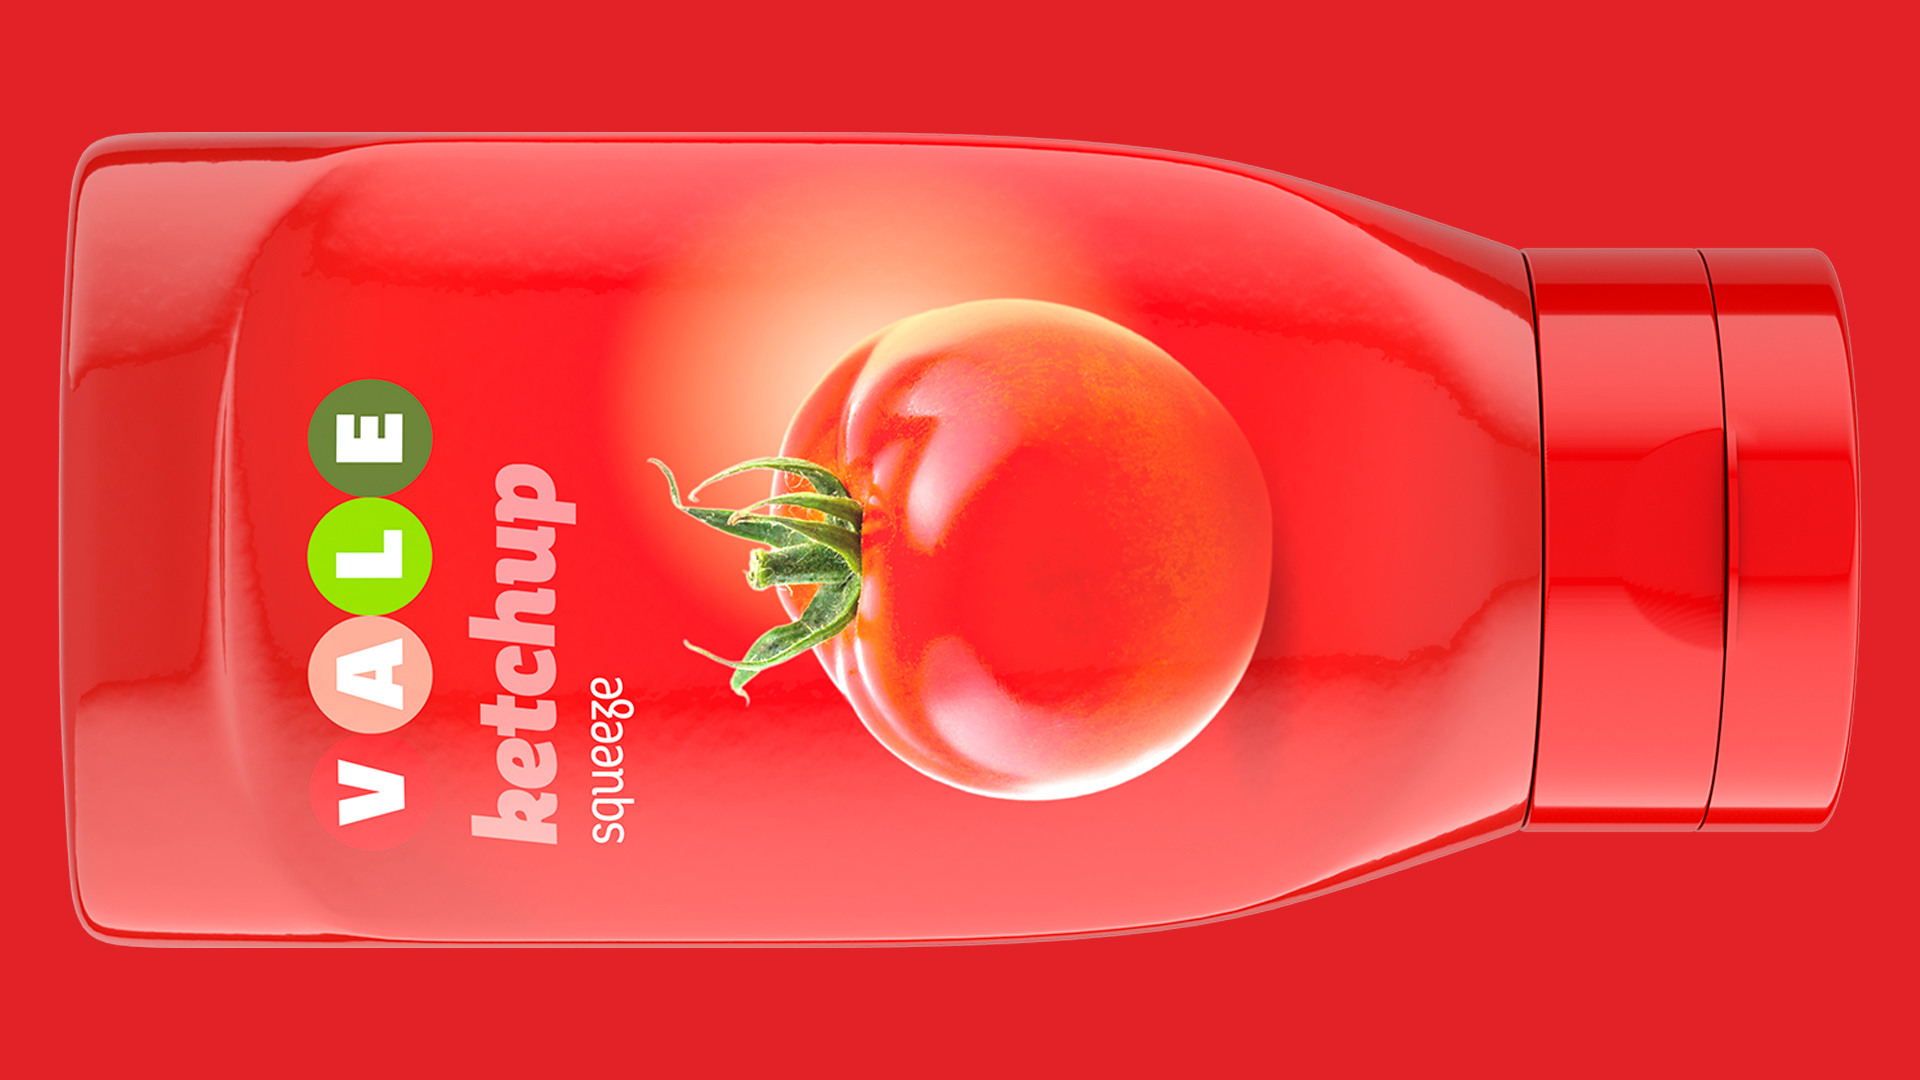 Vale ketchup Rossetti brand design